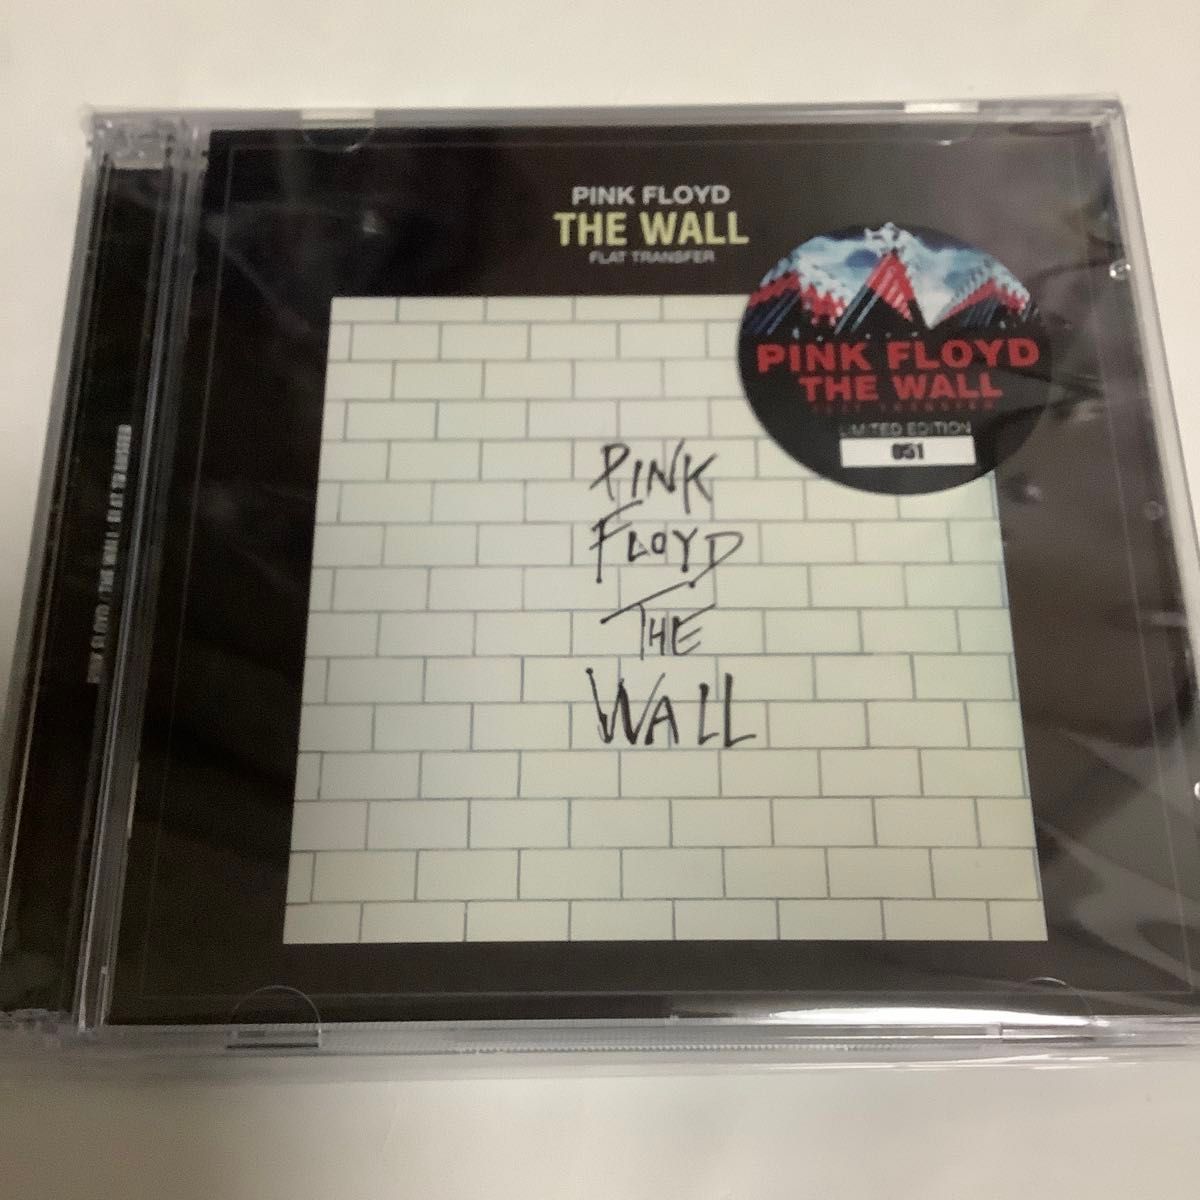 PINK FLOYD / THE WALL:FLAT TRANSFER 2CD